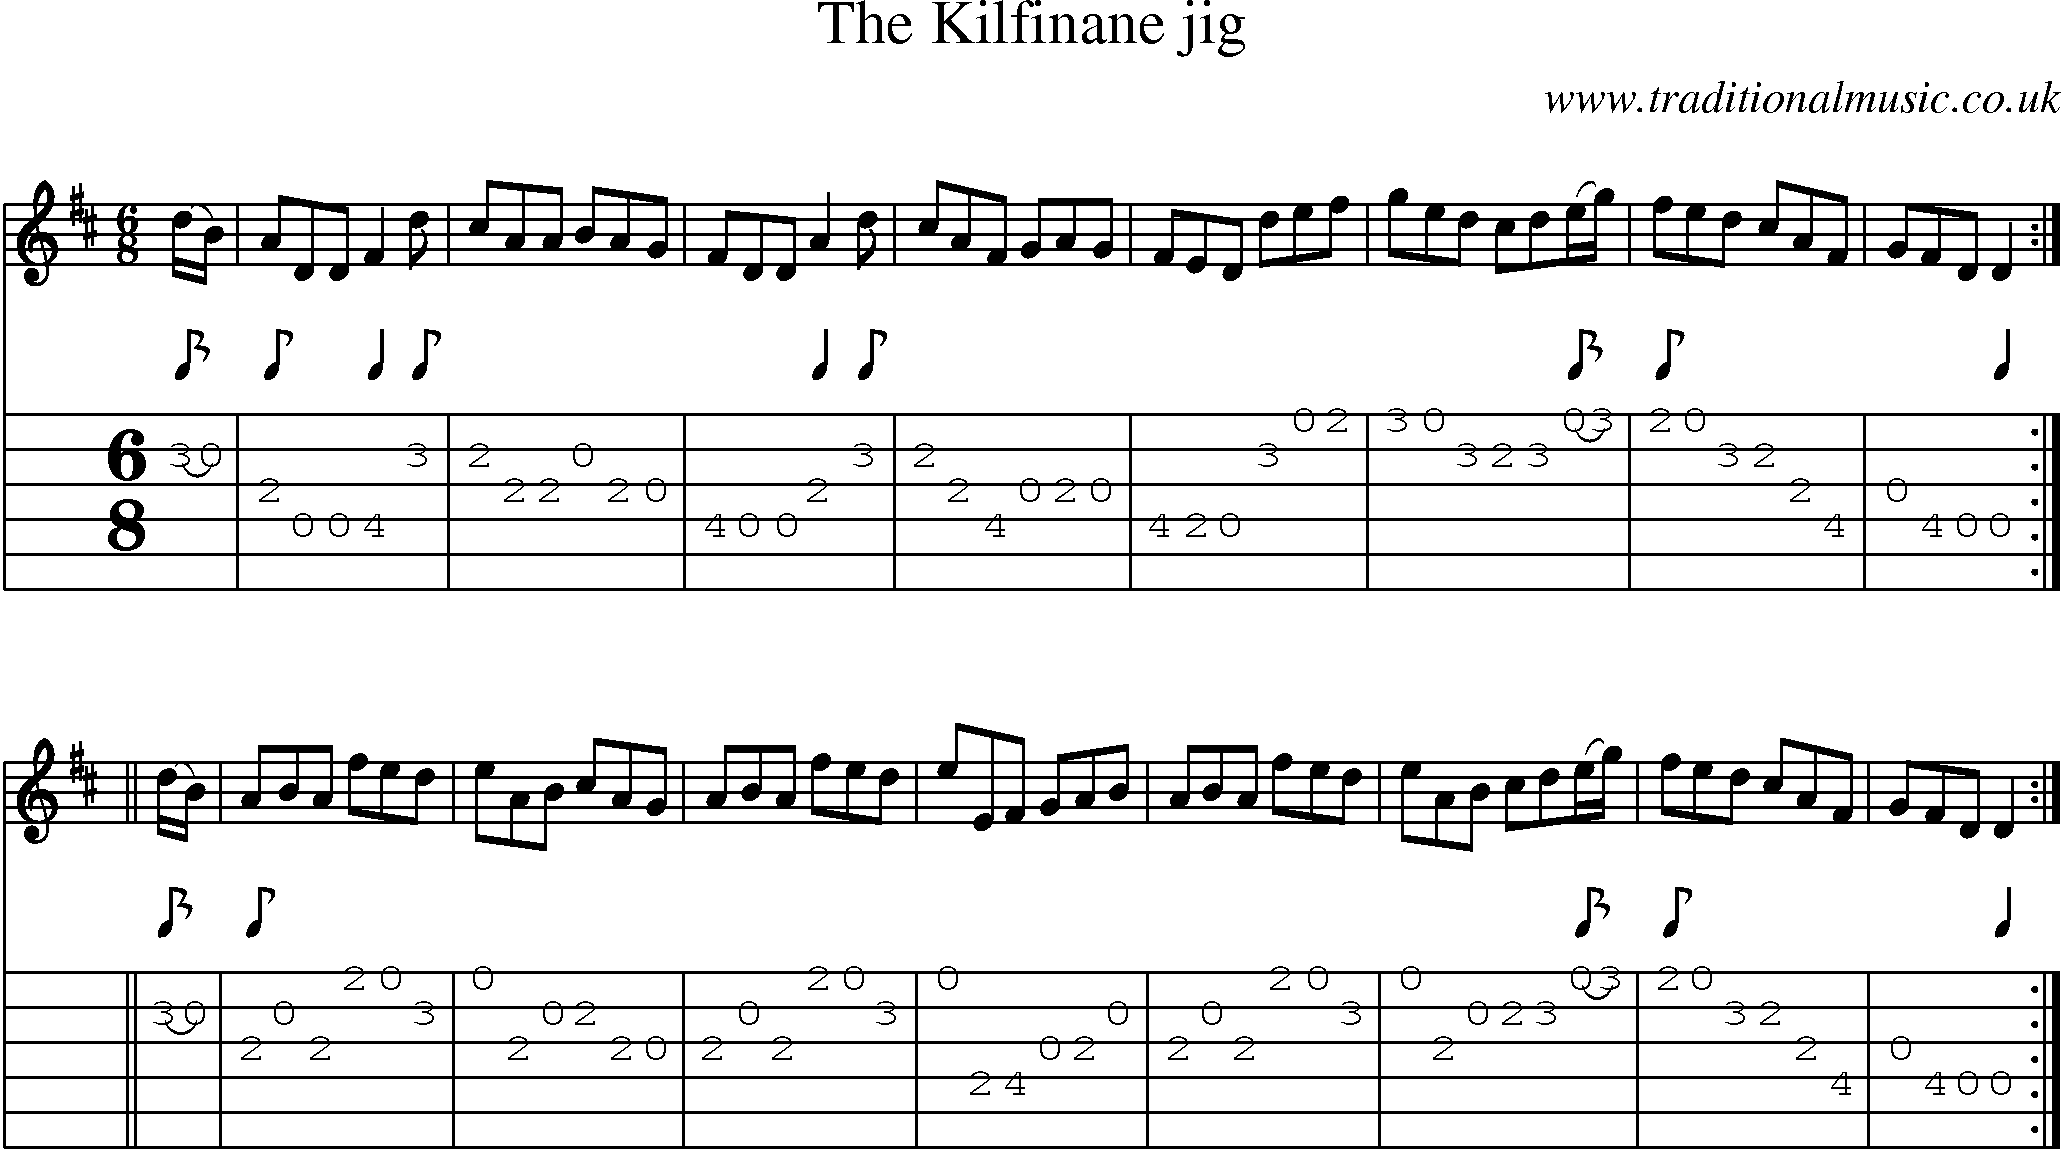 Music Score and Guitar Tabs for Kilfinane Jig